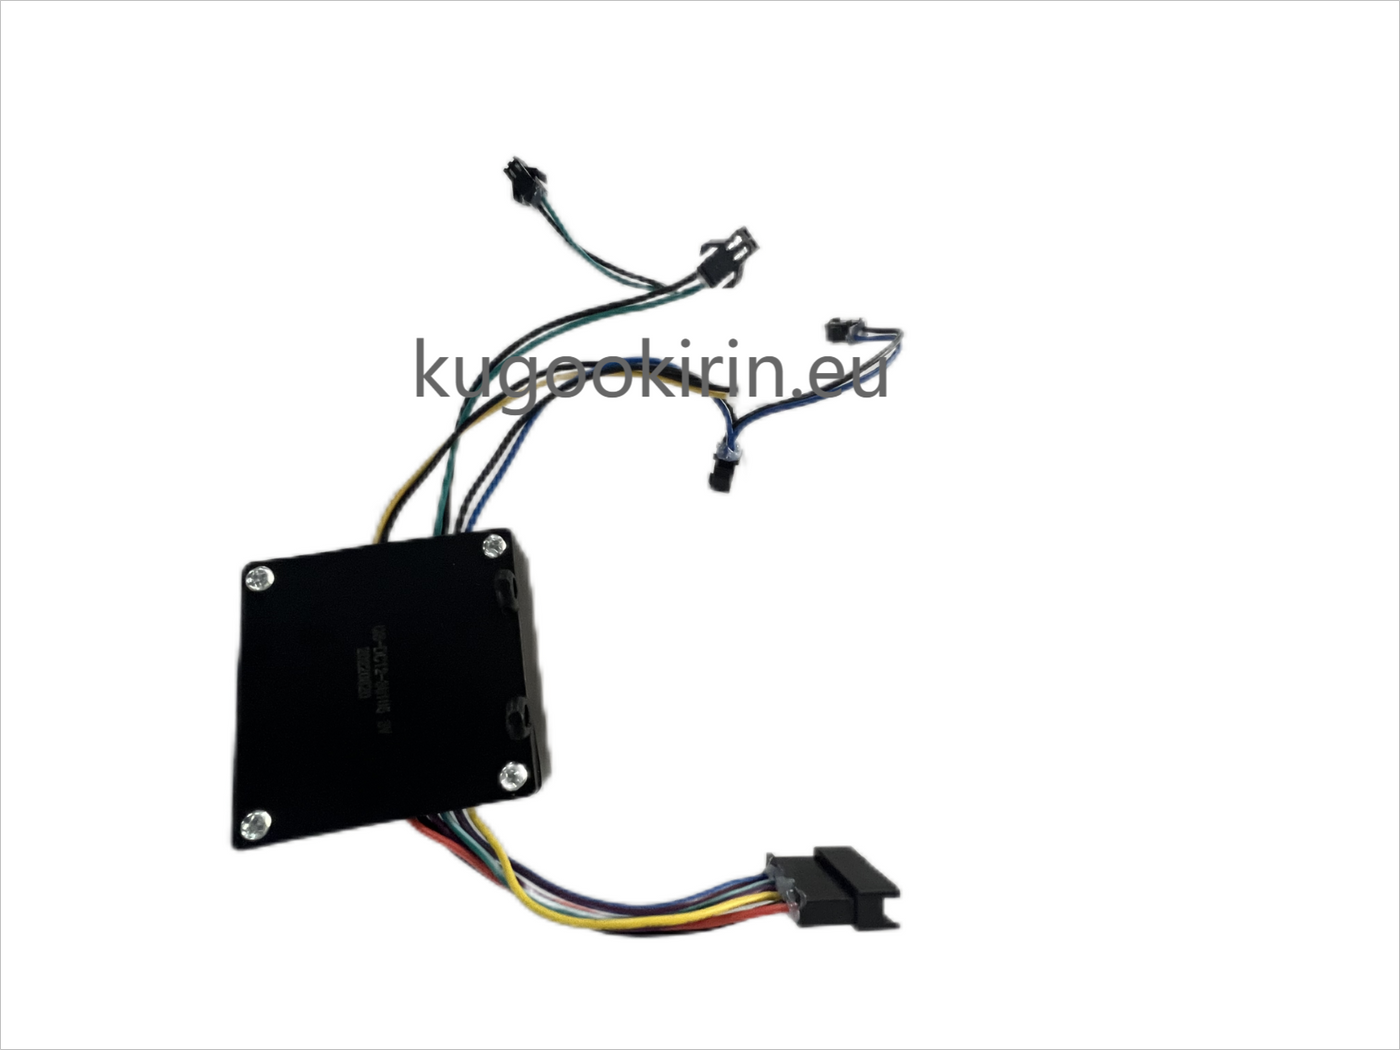 Headlight Module per Kugoo Kirin KuKirin G2 Pro